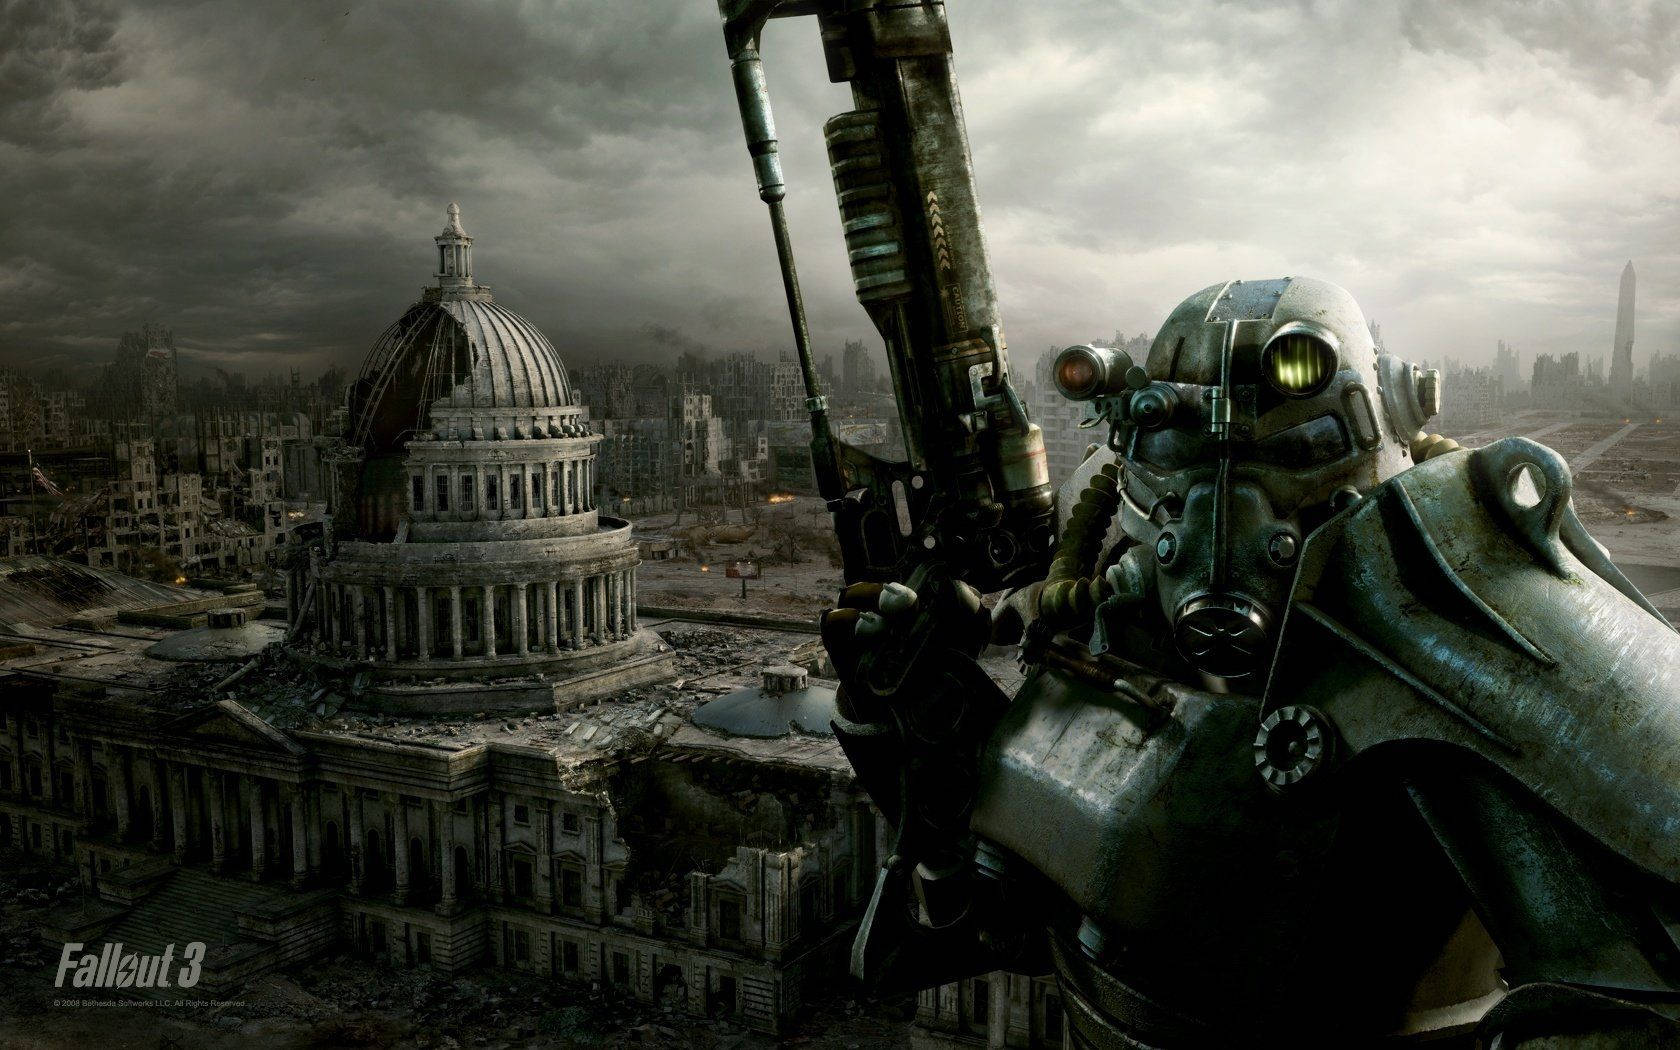 Power Armored Ranger Fallout 3 Wallpaper